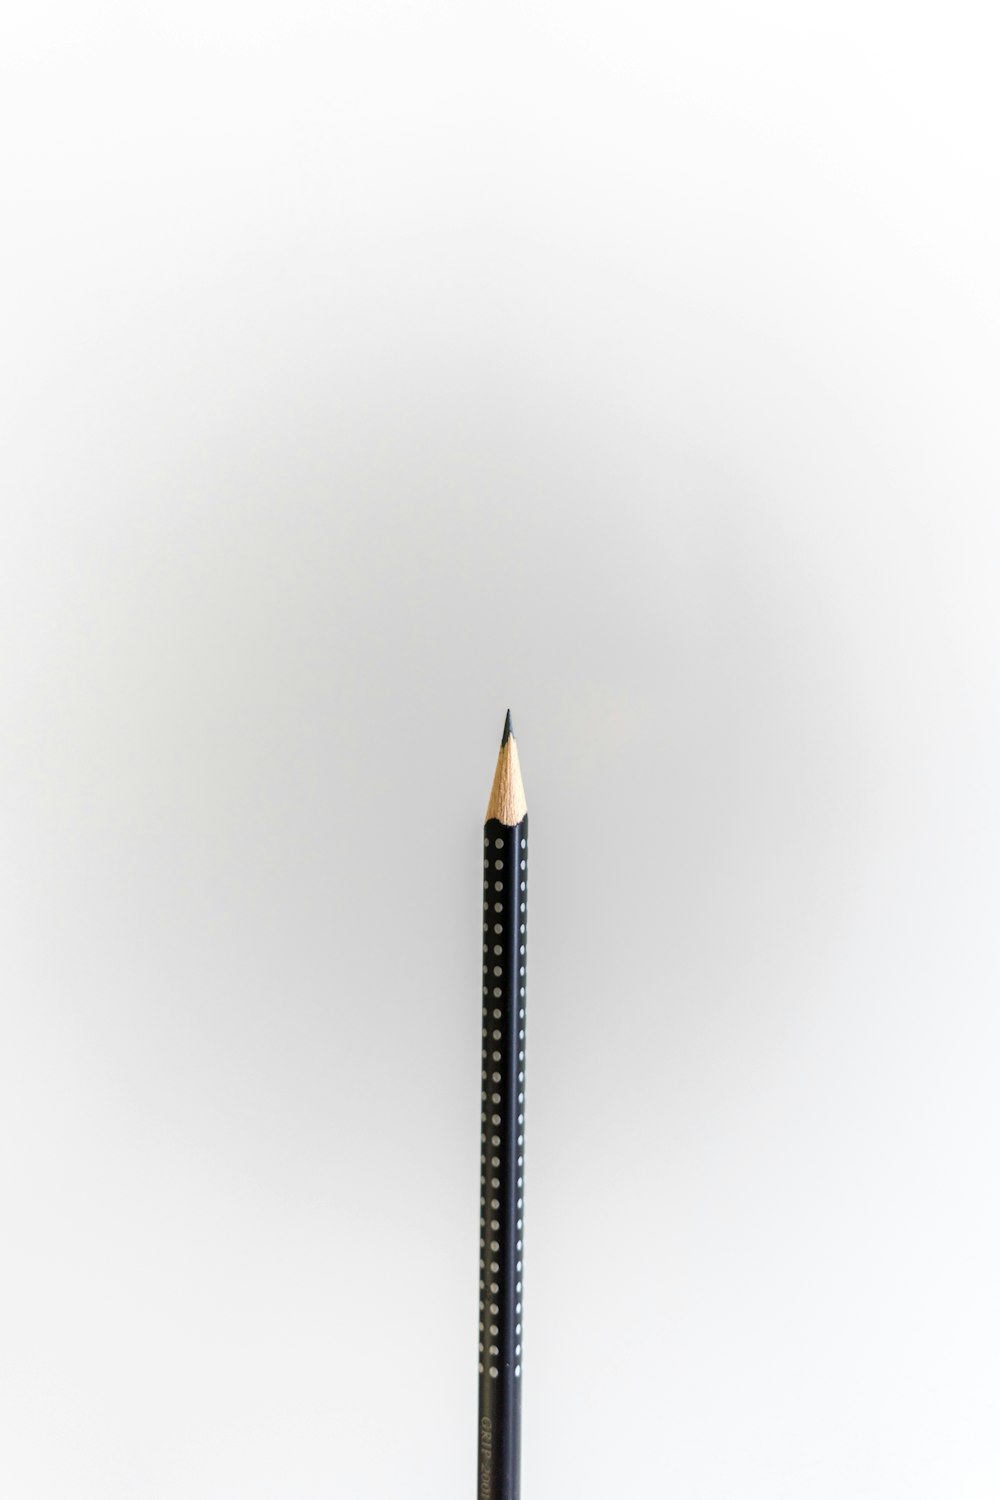 matita nera su superficie bianca